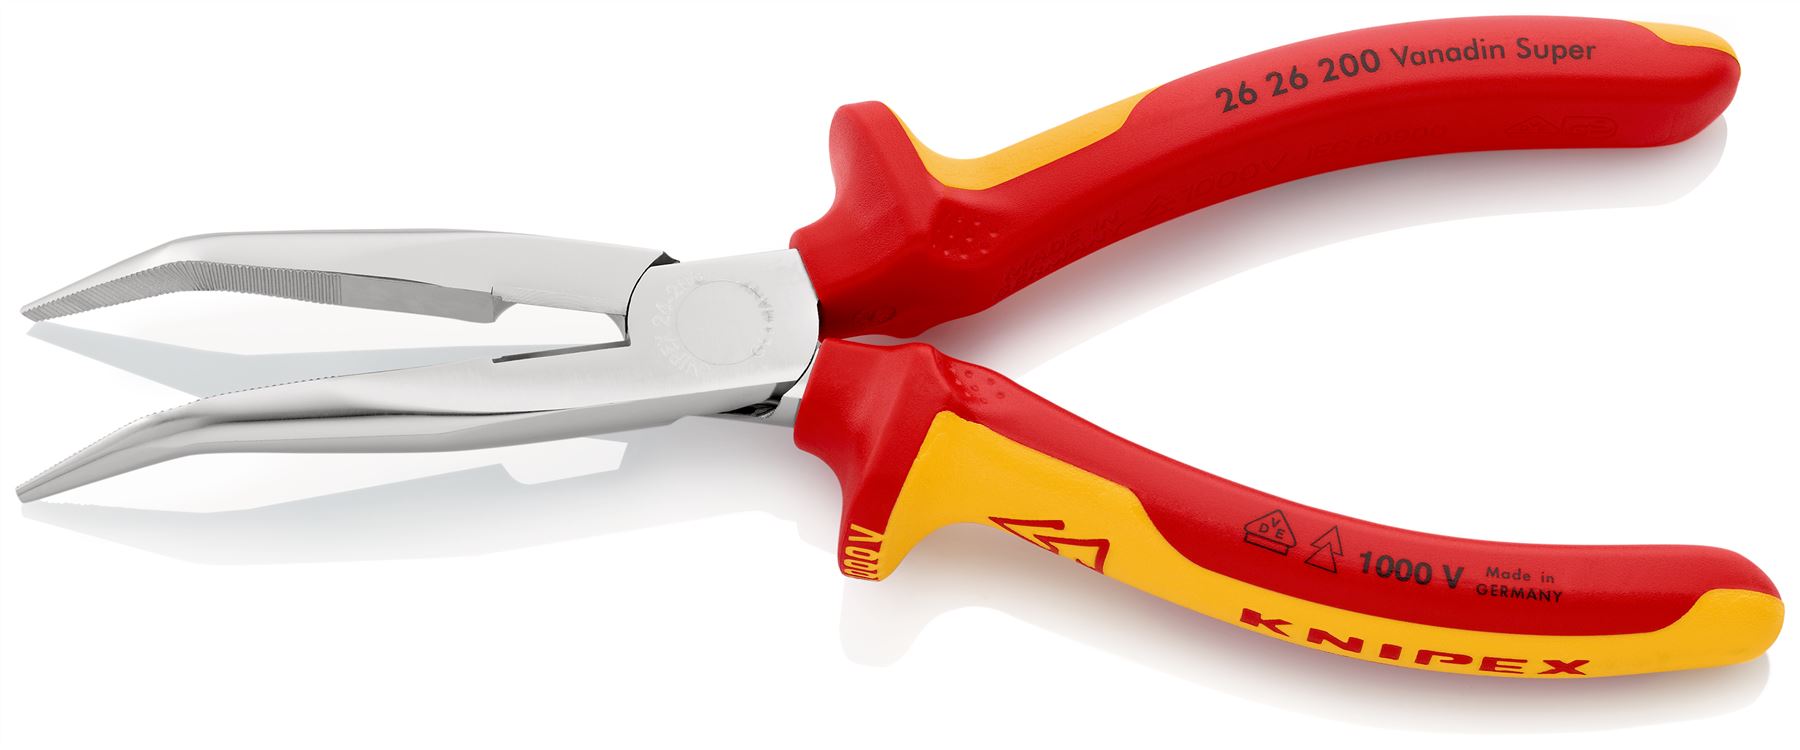 KNIPEX Snipe Nose Side Cutting Pliers Stork Beak Plier Bent Nose 200mm VDE Chrome Multi Component Grips 26 26 200 SB